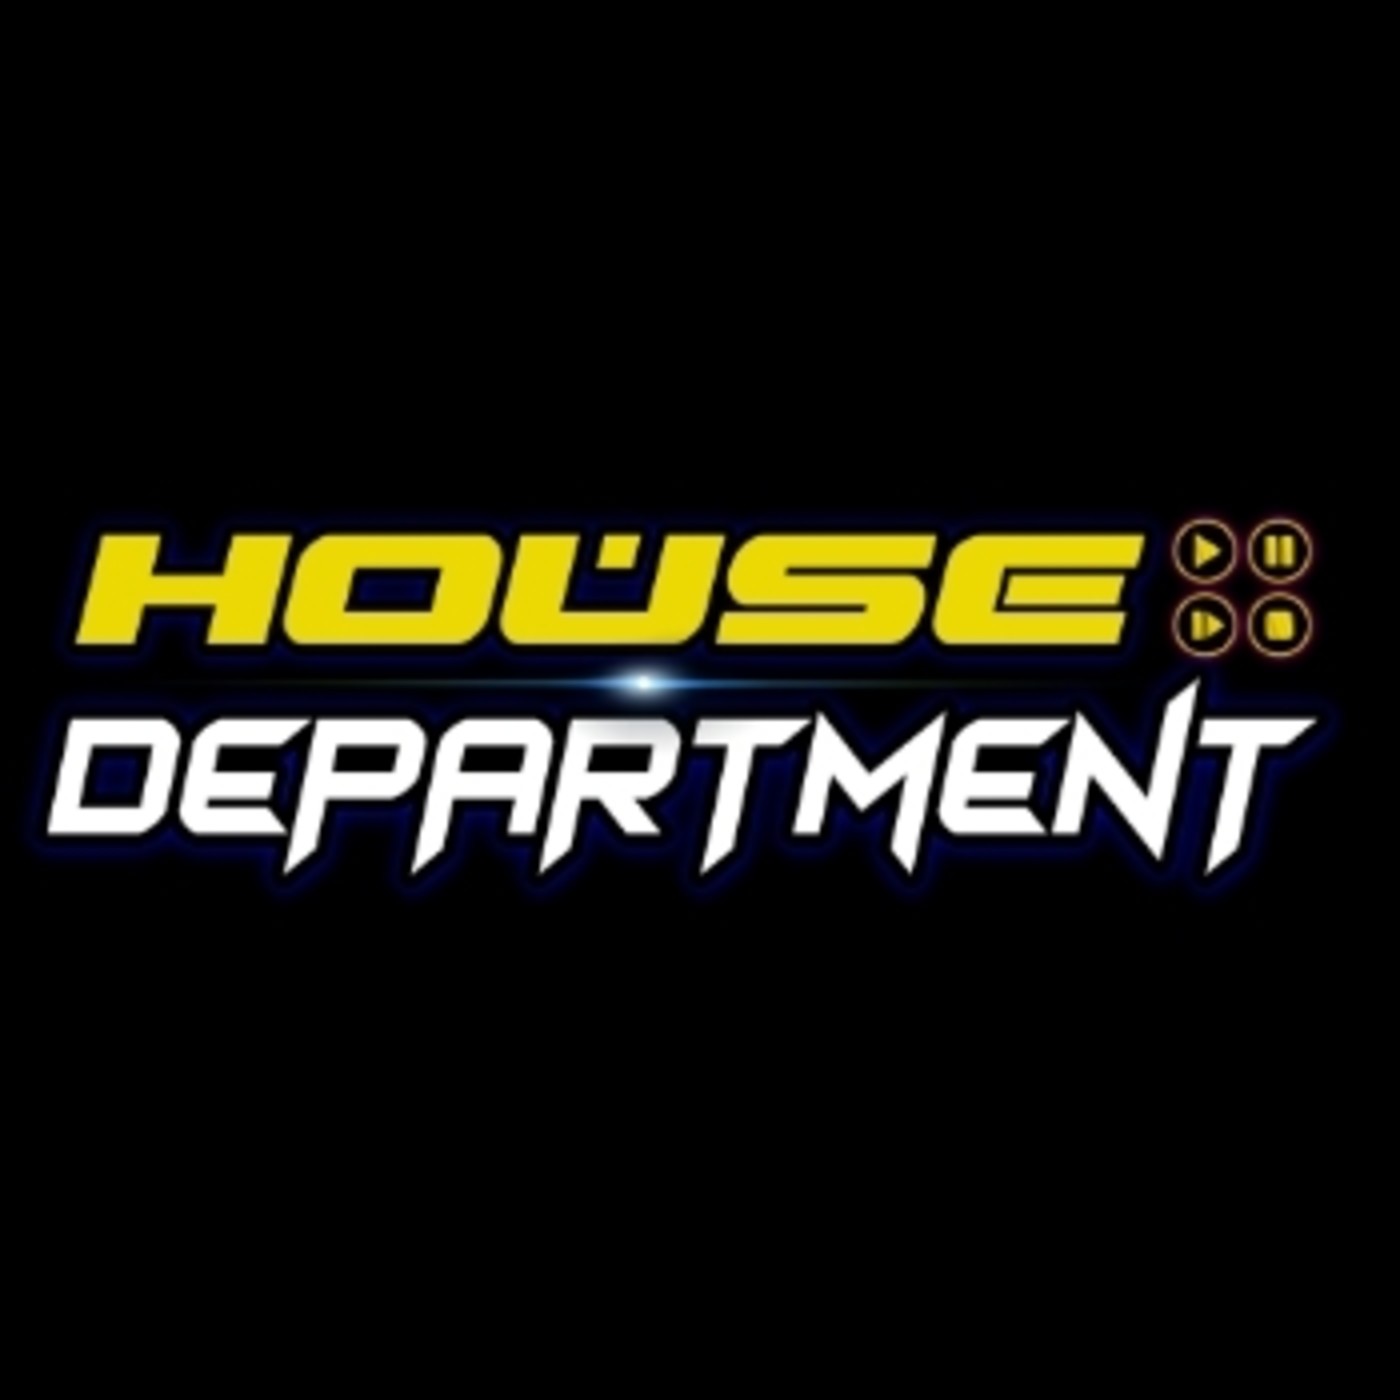 HOUSE DEPARTMEN